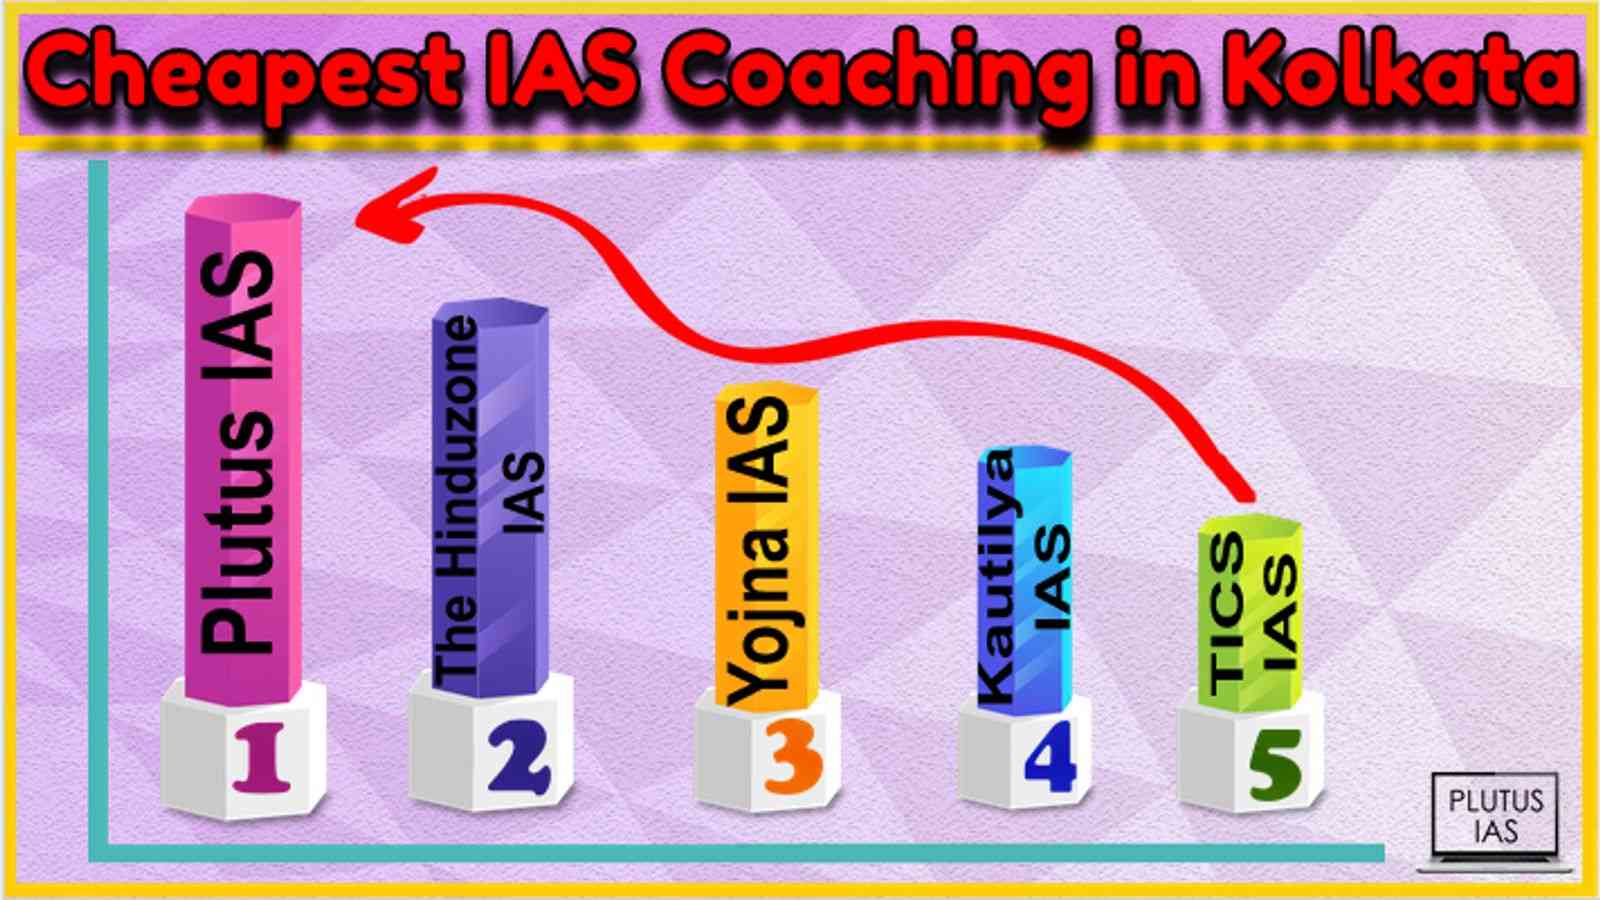 Cheapest IAS Coaching in Kolkata